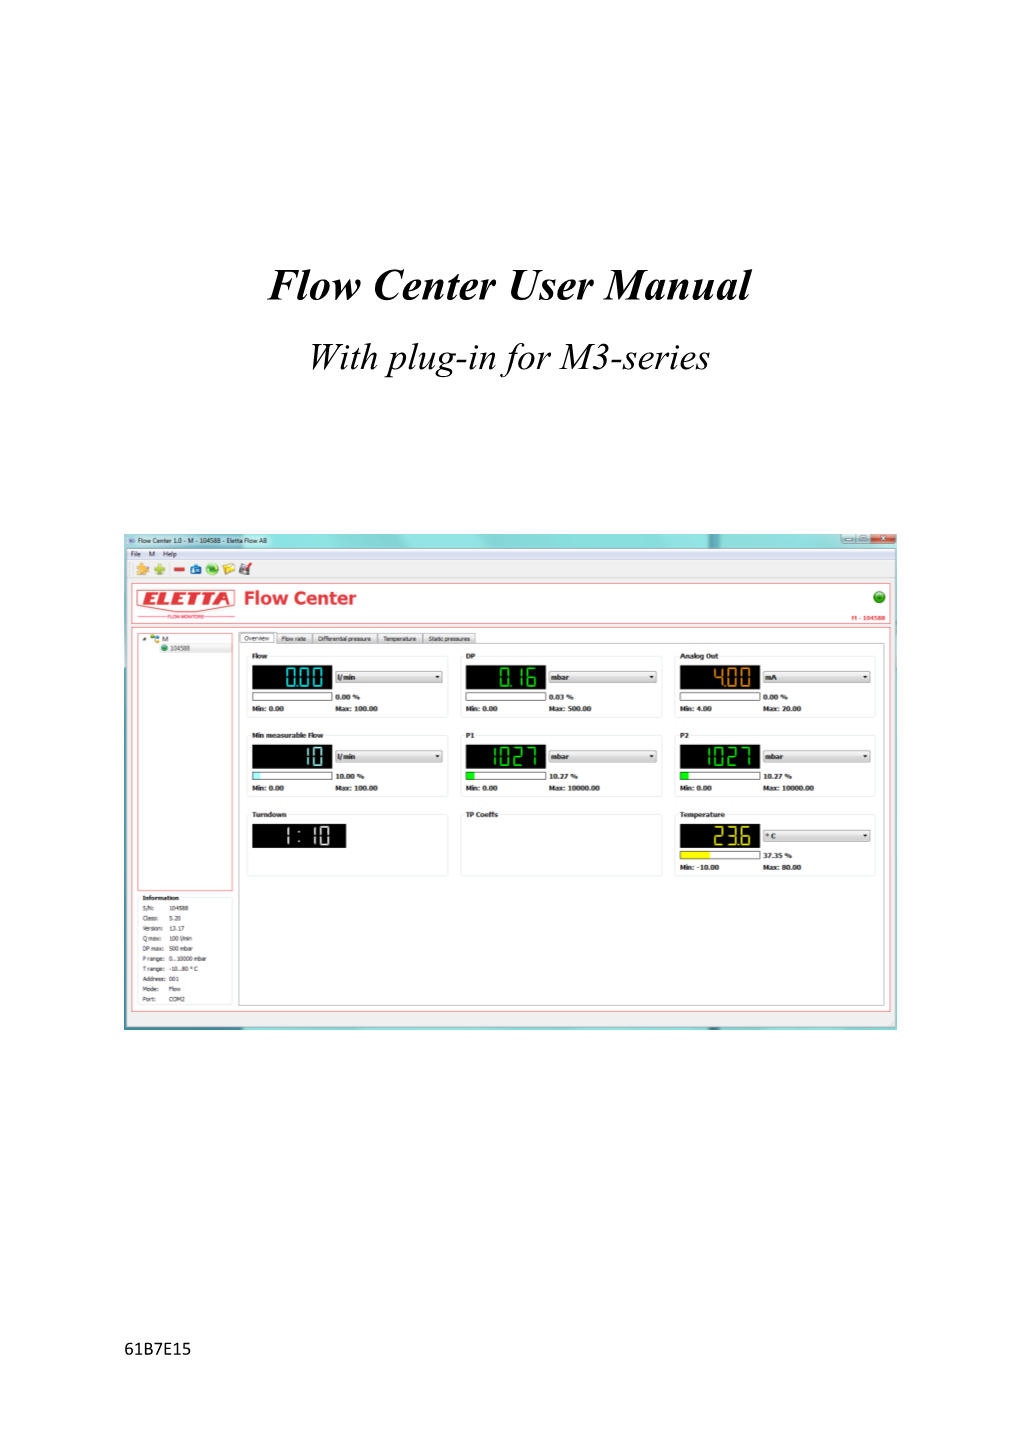 Flow Center User Manual